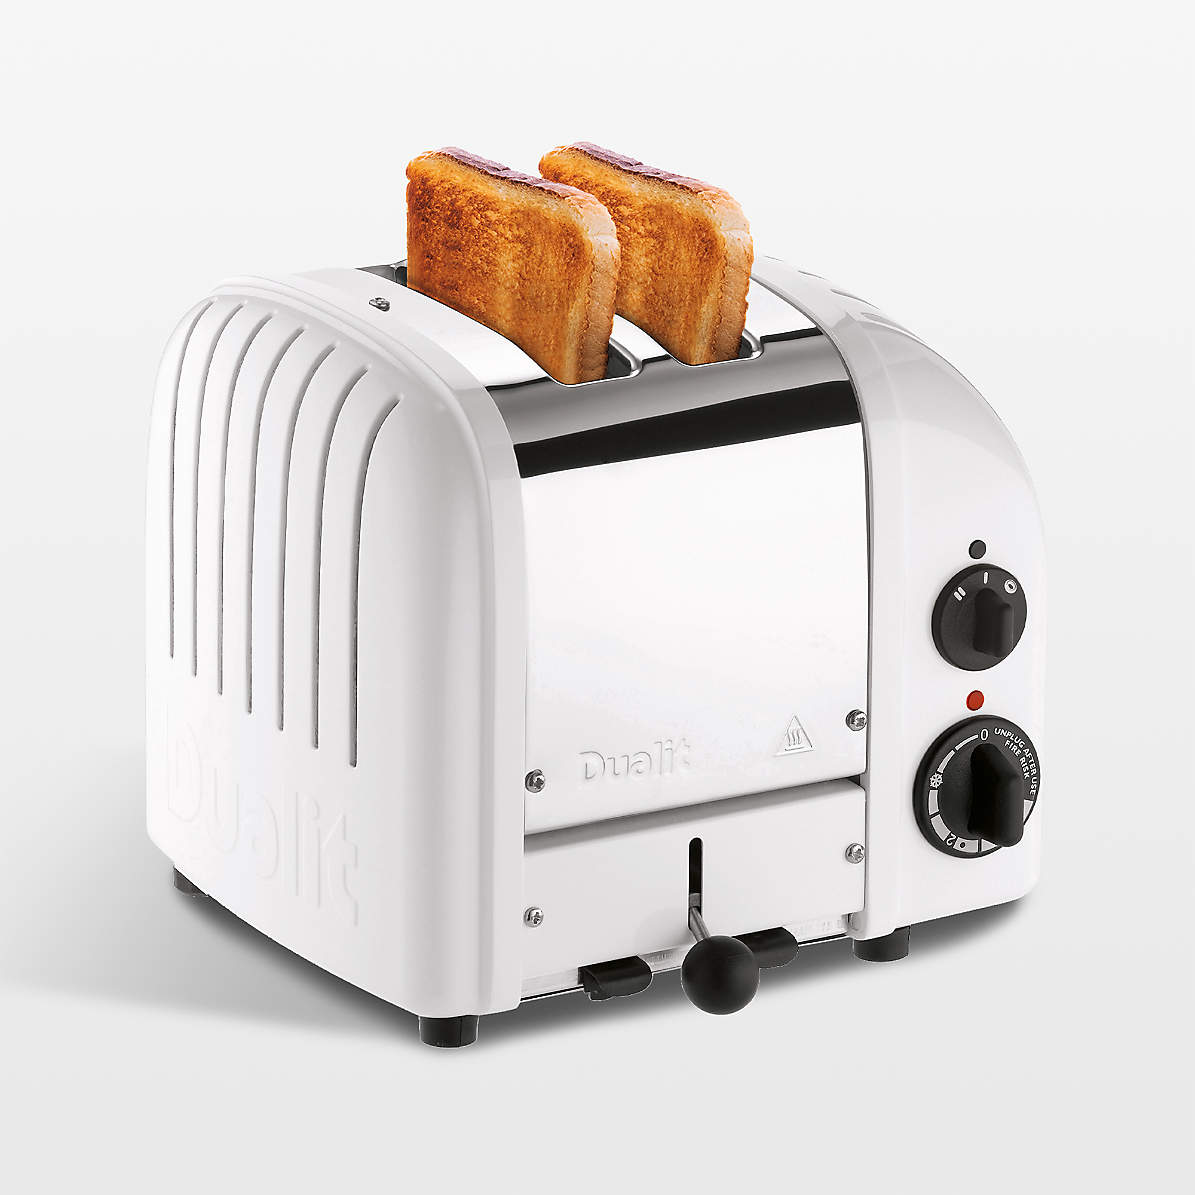 Dualit NewGen White 2-Slice Toaster